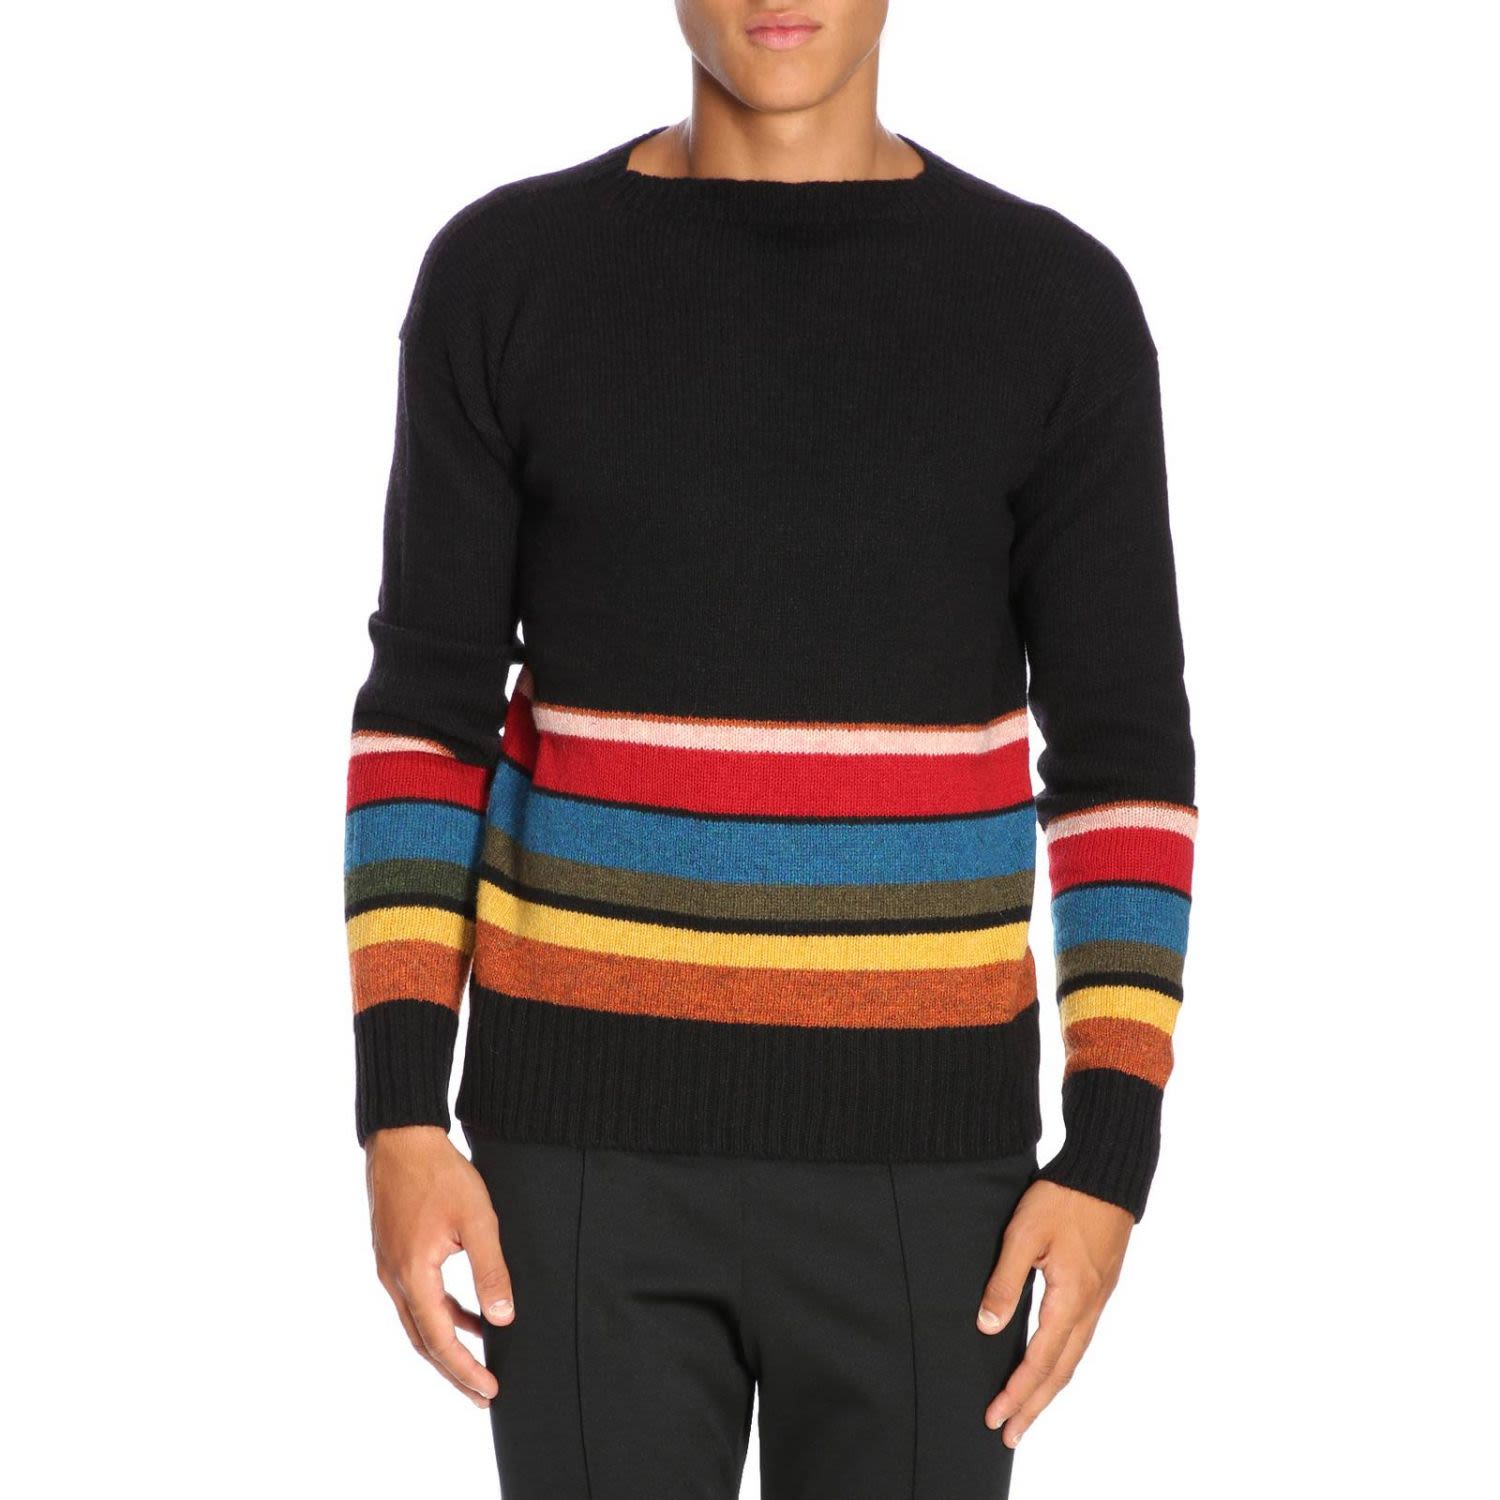 italist | Best price in the market for Prada Sweater Sweater Men Prada ...